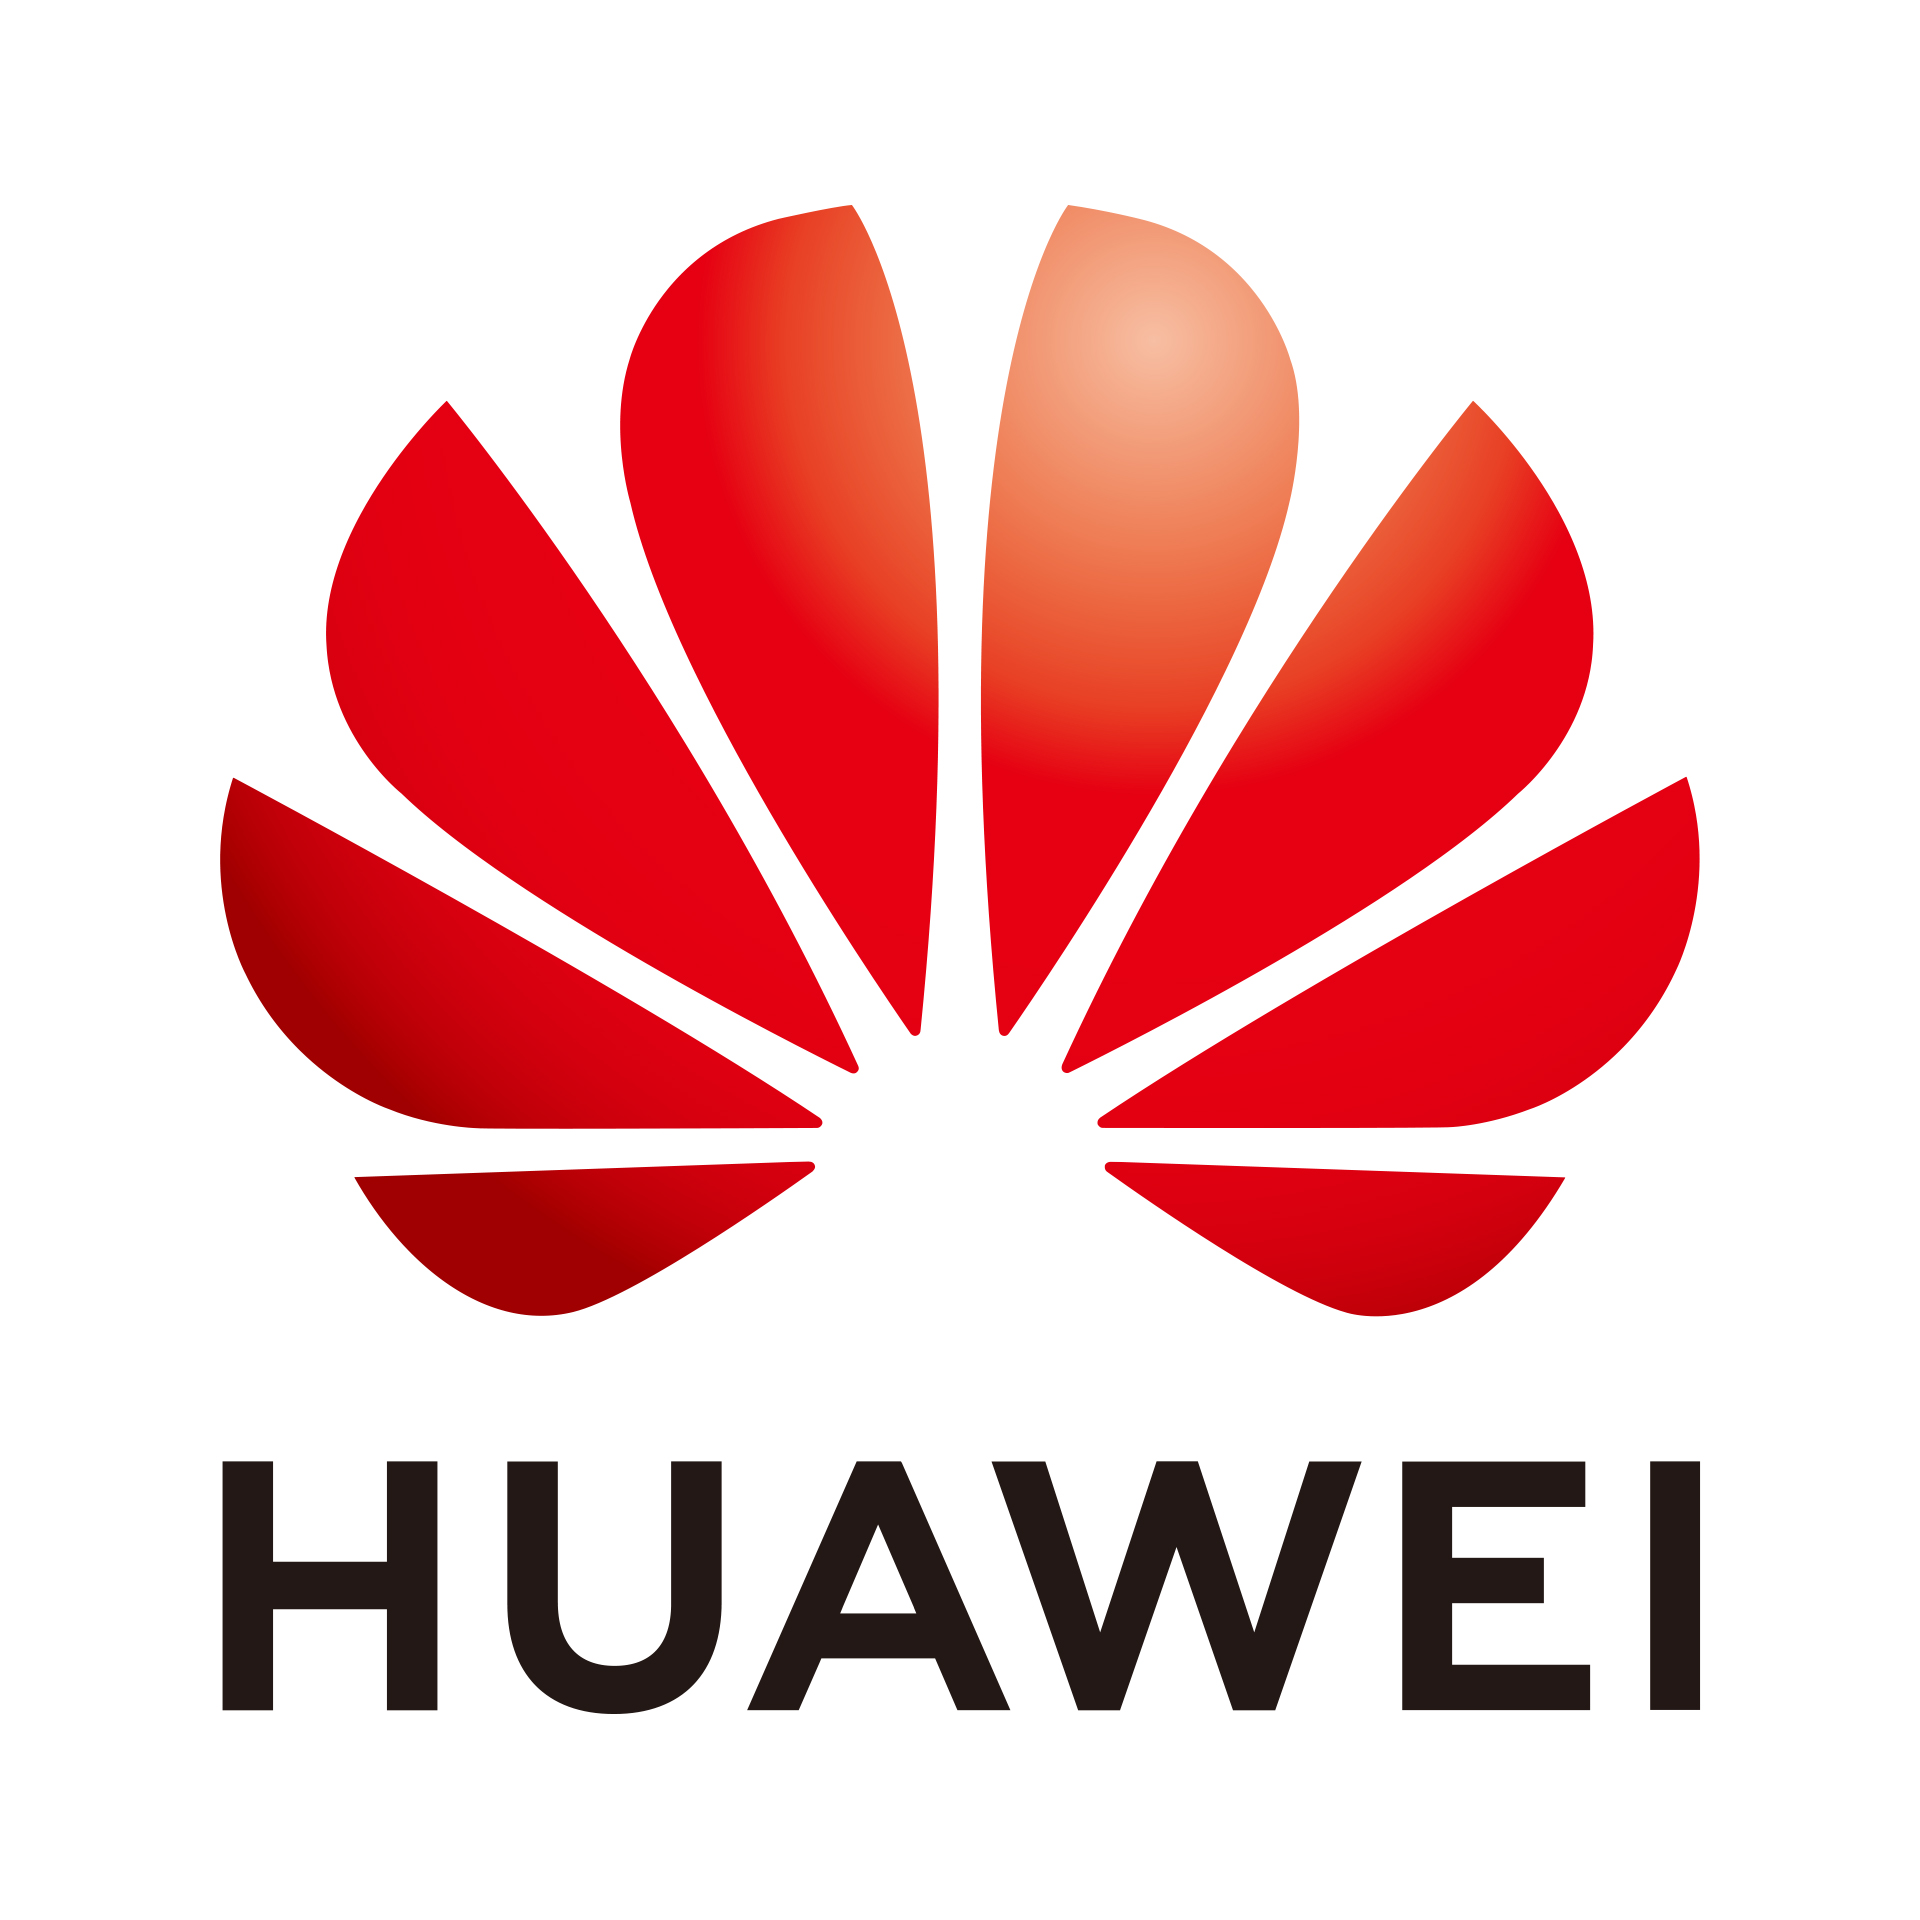 Huawei Technologies Hungary Kft.